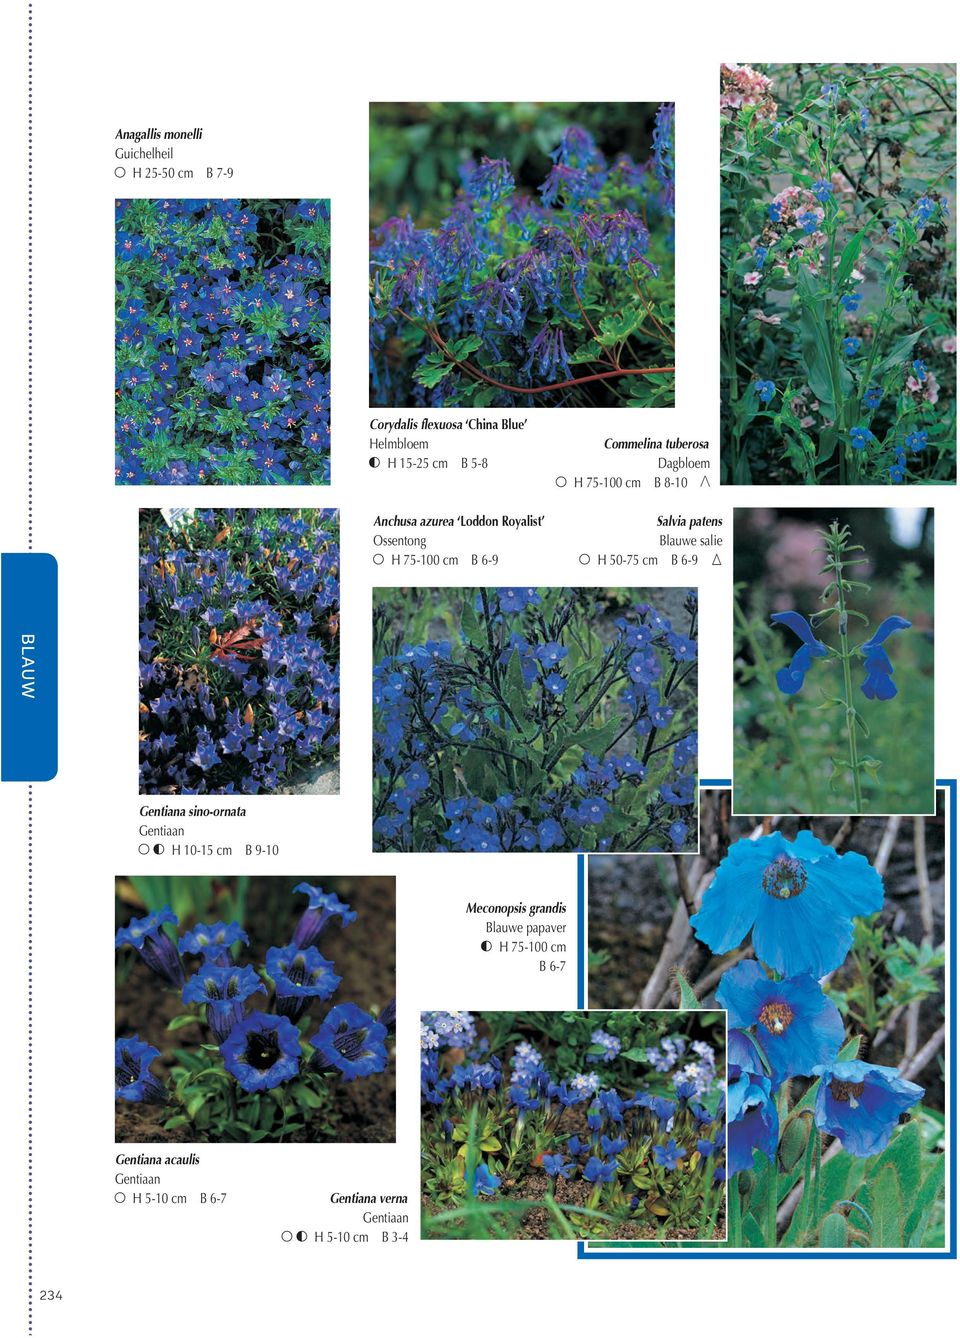 Salvia patens Blauwe salie H 50-75 cm B 6-9 Gentiana sino-ornata Gentiaan H 10-15 cm B 9-10 Meconopsis